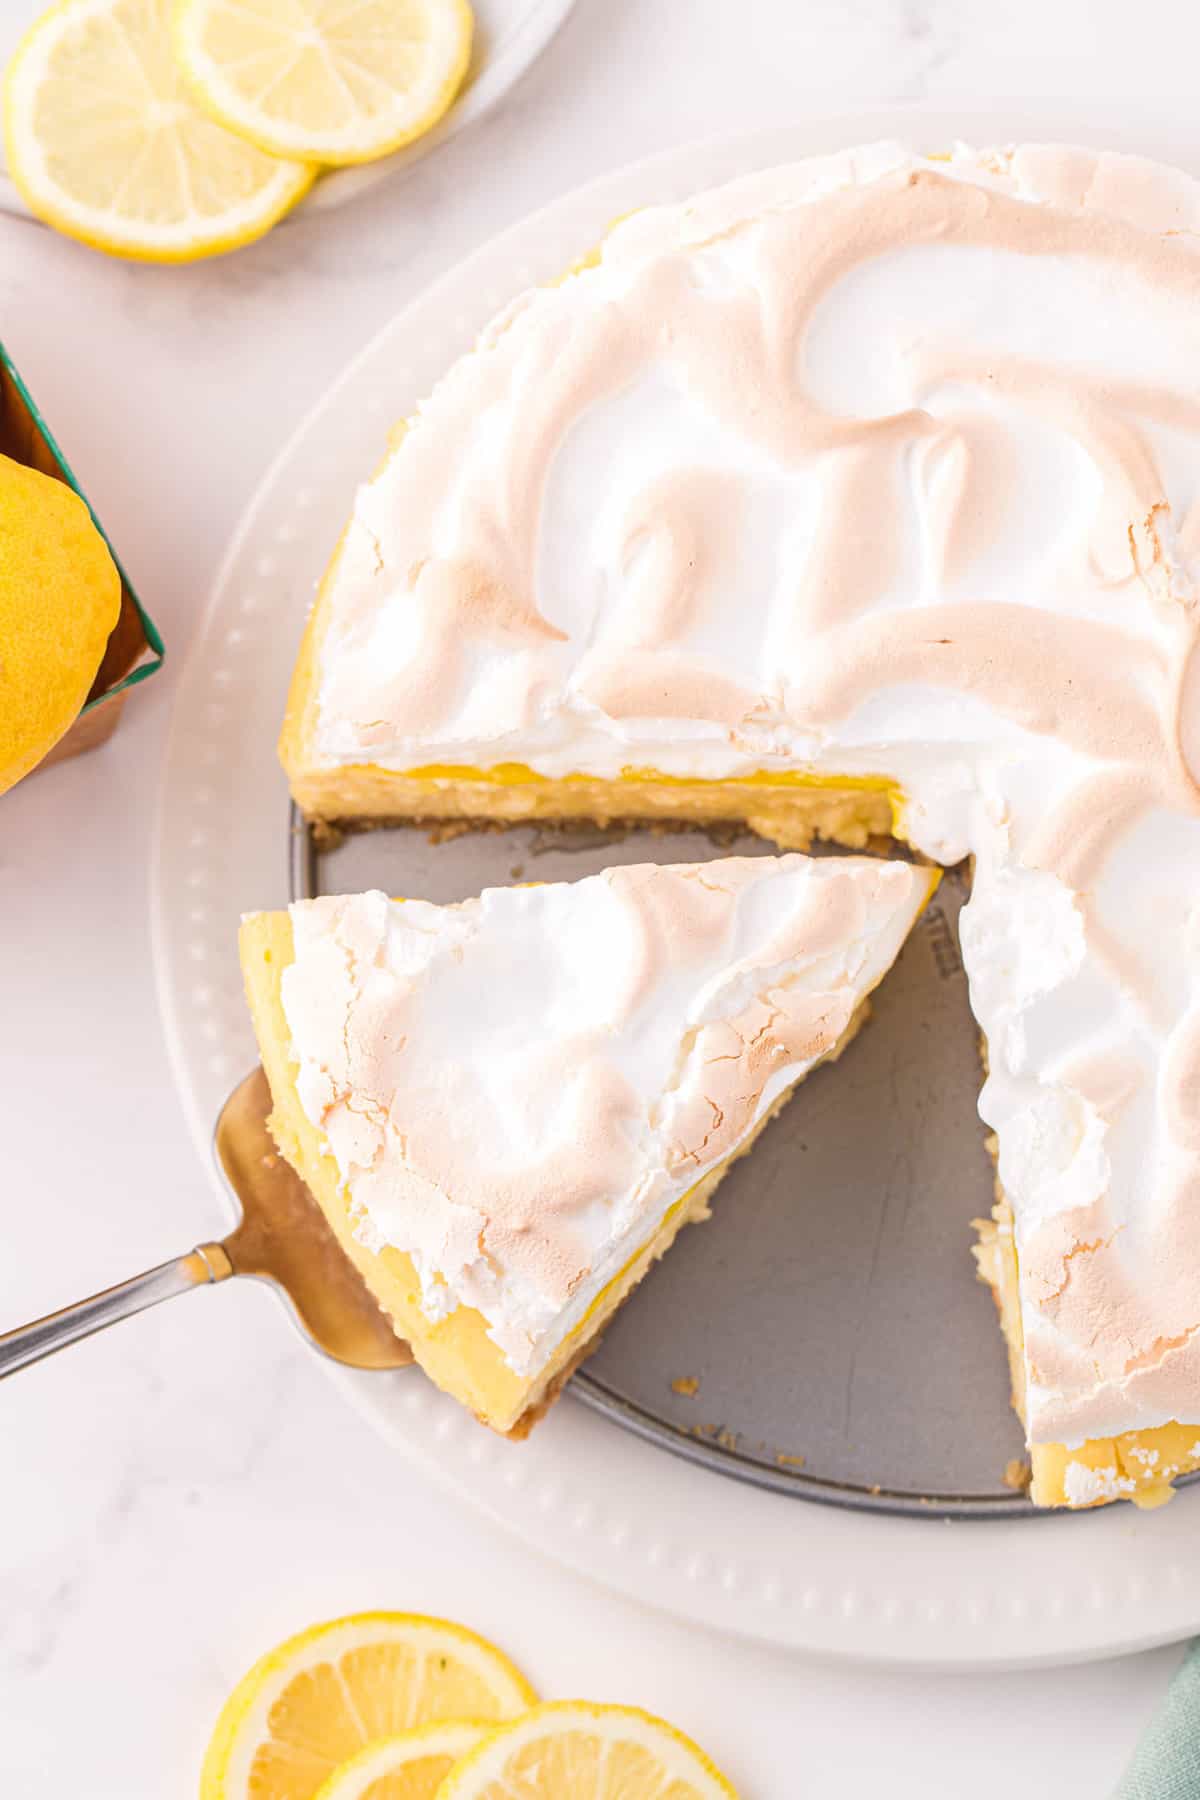 Lemon Meringue Cheesecake Sliced and Ready to Enjoy